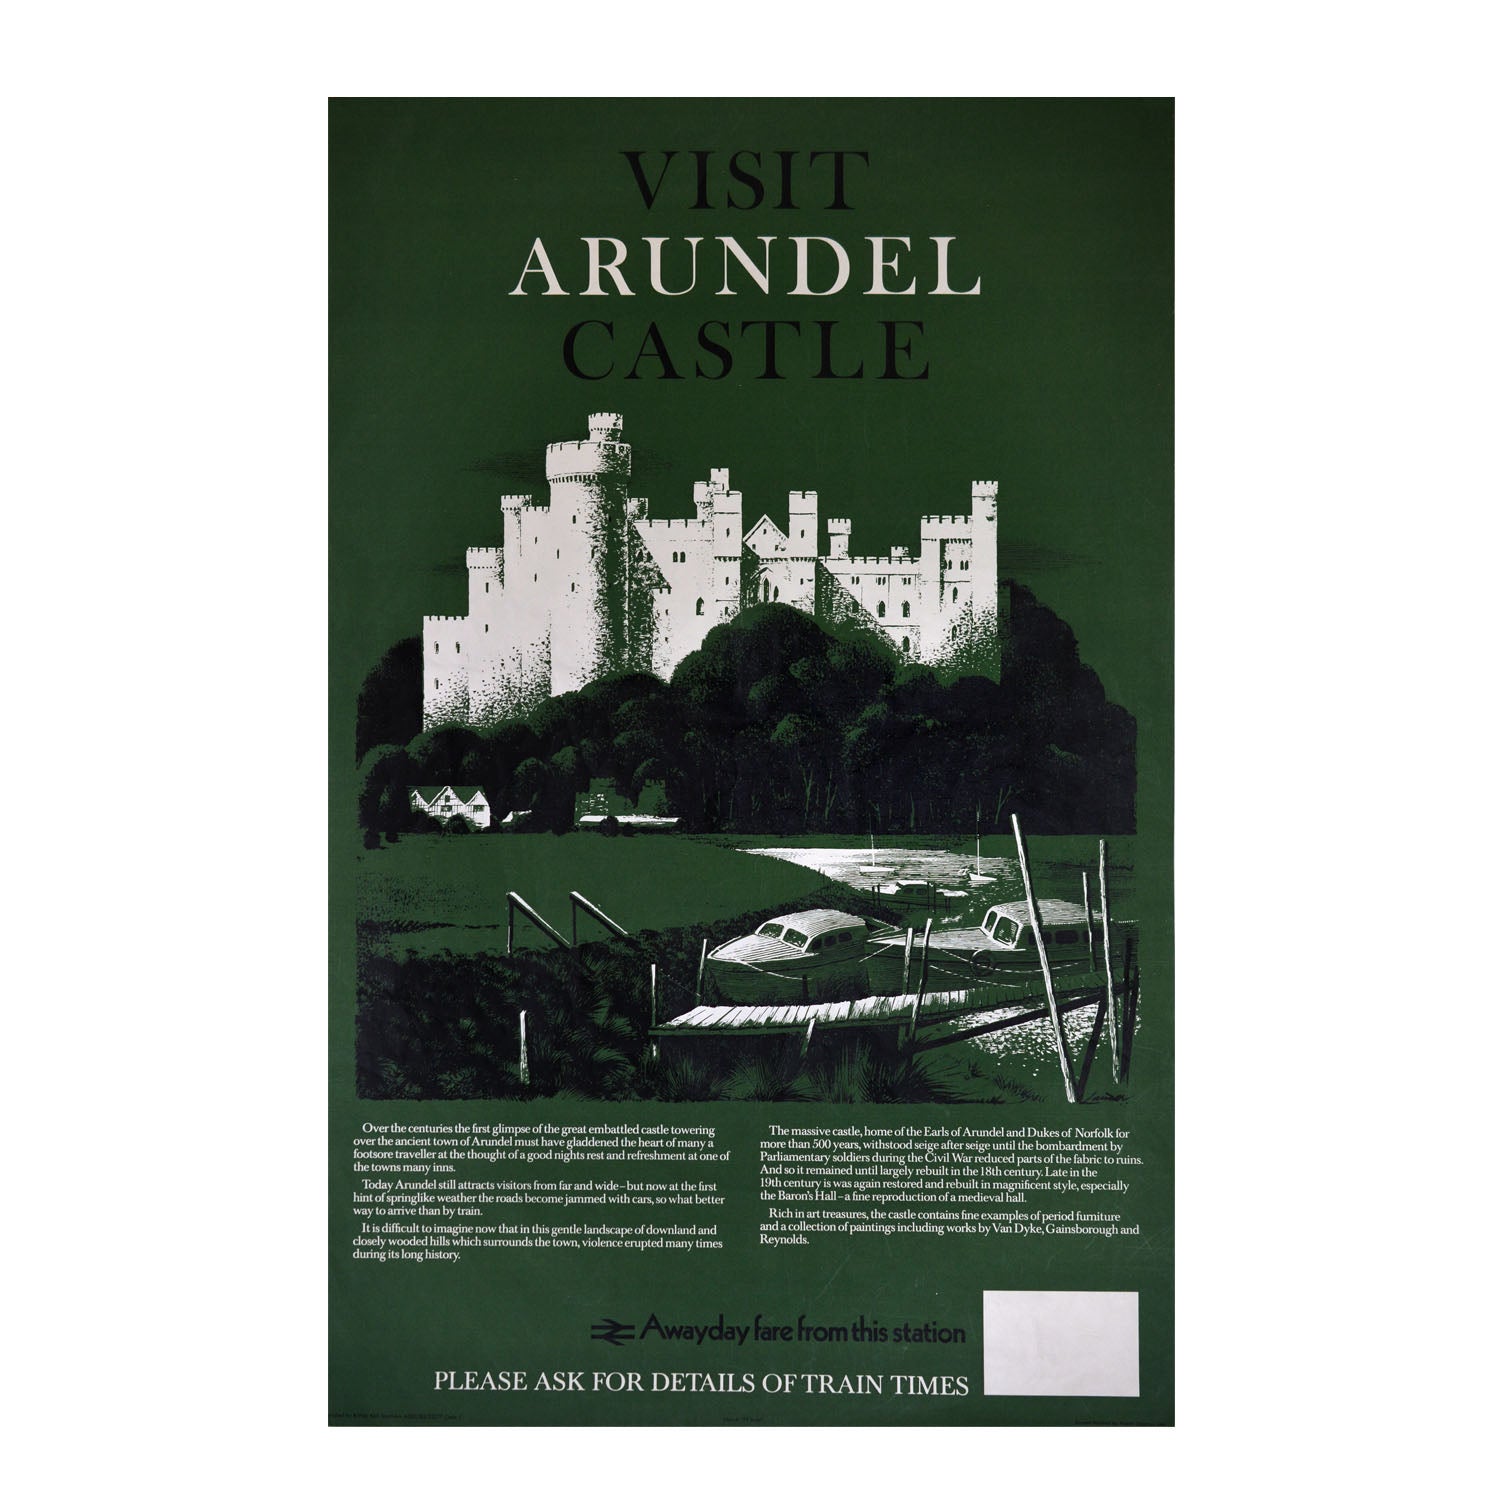 Original British Rail poster Lander Arundel Castle